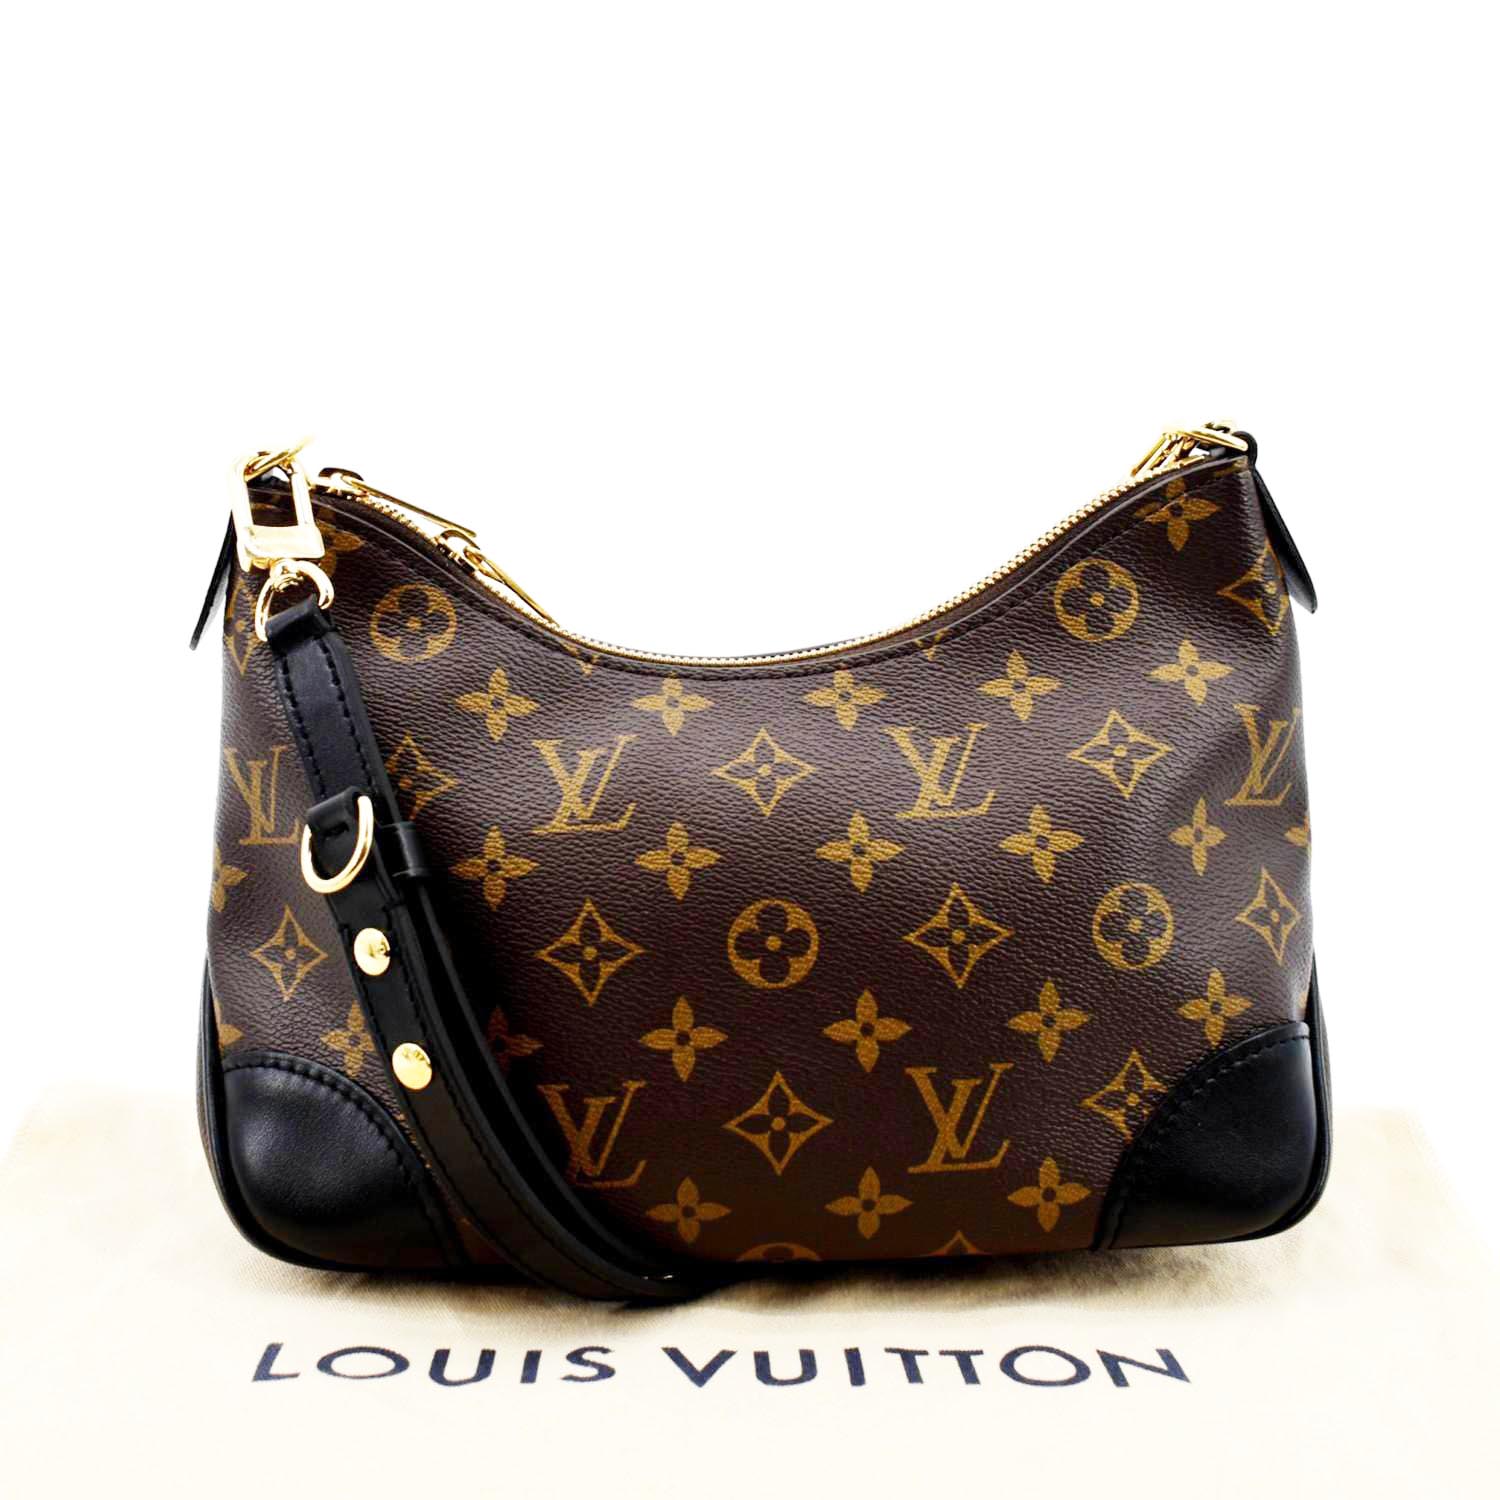 Louis Vuitton Boulogne second hand prices